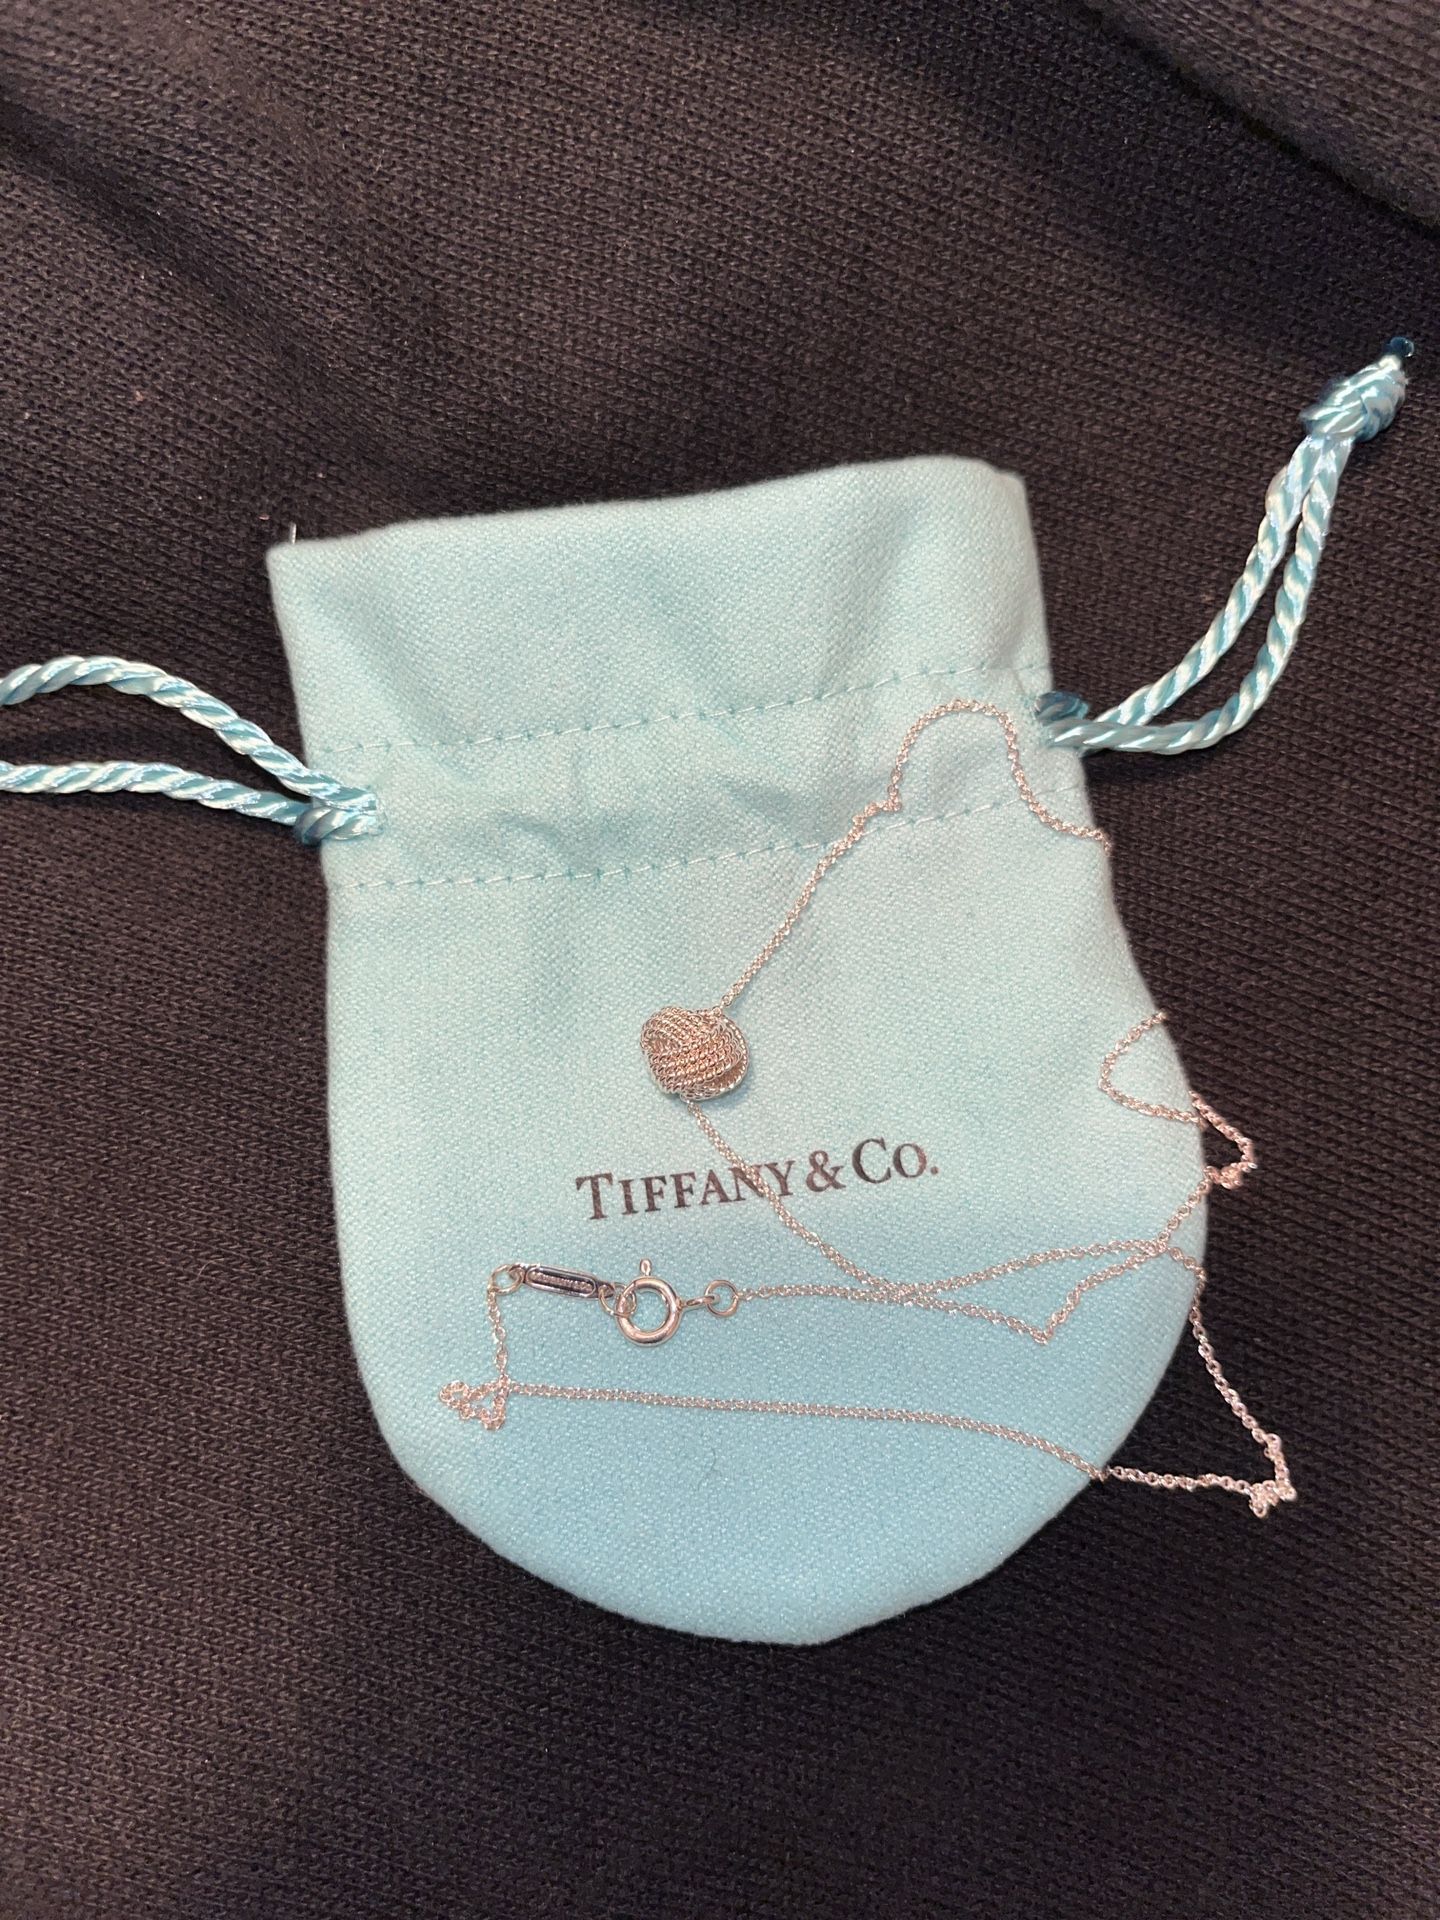 Tiffany & Co. Knot Pendant Necklace